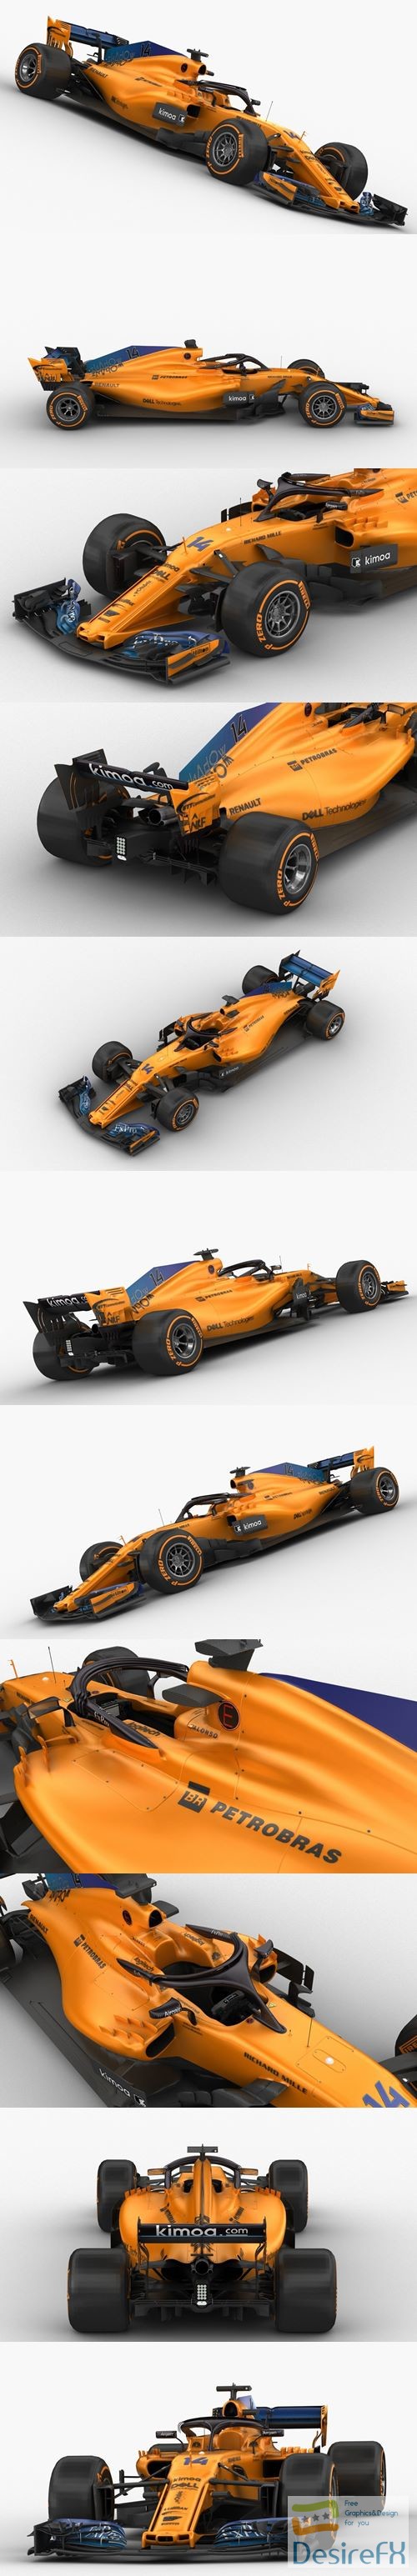 F1 McLaren MCL33 2018 3D Model